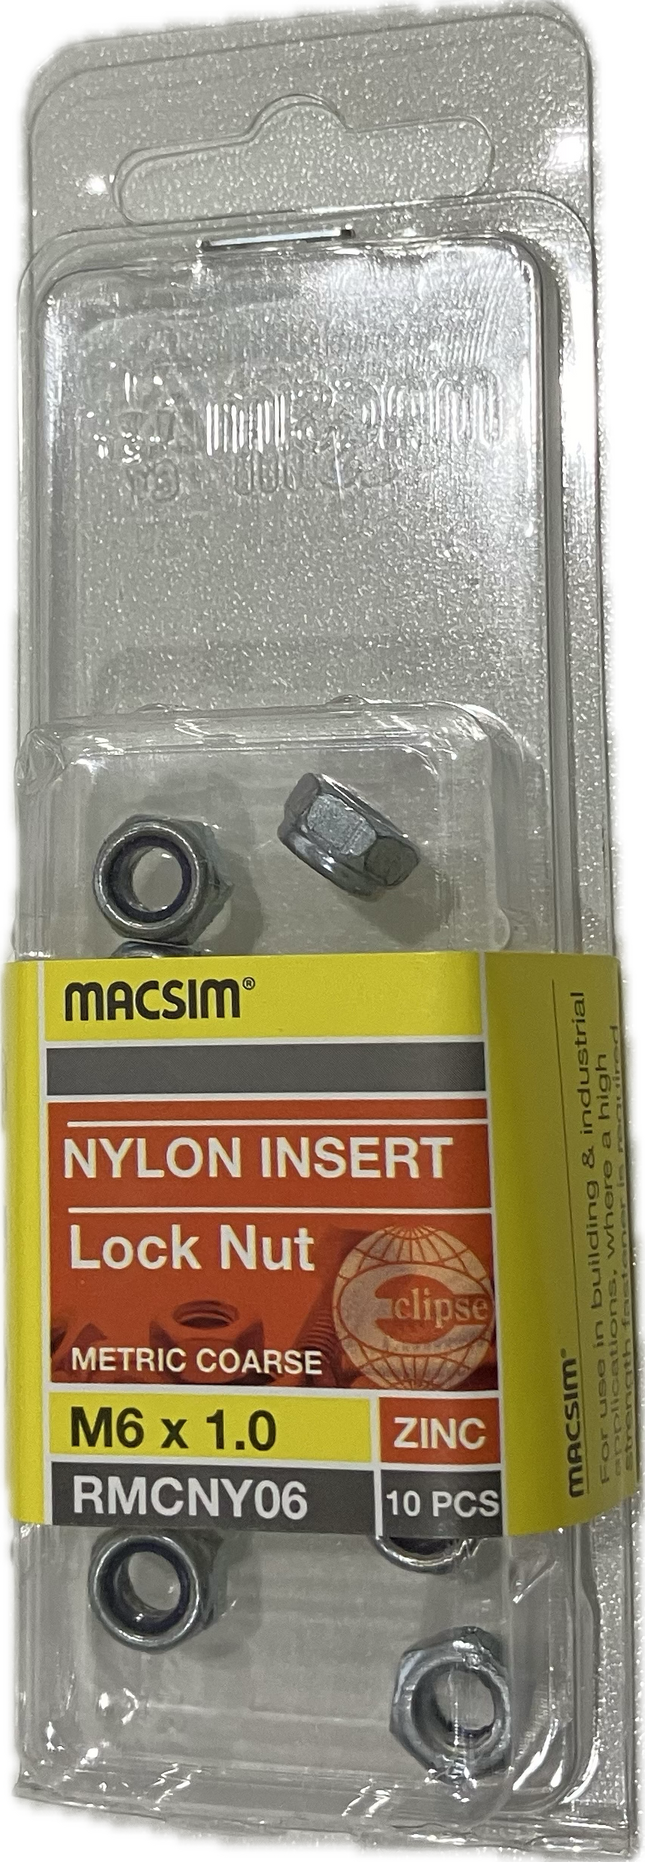 MACSIM HEX HEAD MATRIC COARSE NYLON INSERT ZINC PLATED M6 LOCK NUT (BLISTER PACK OF 10)